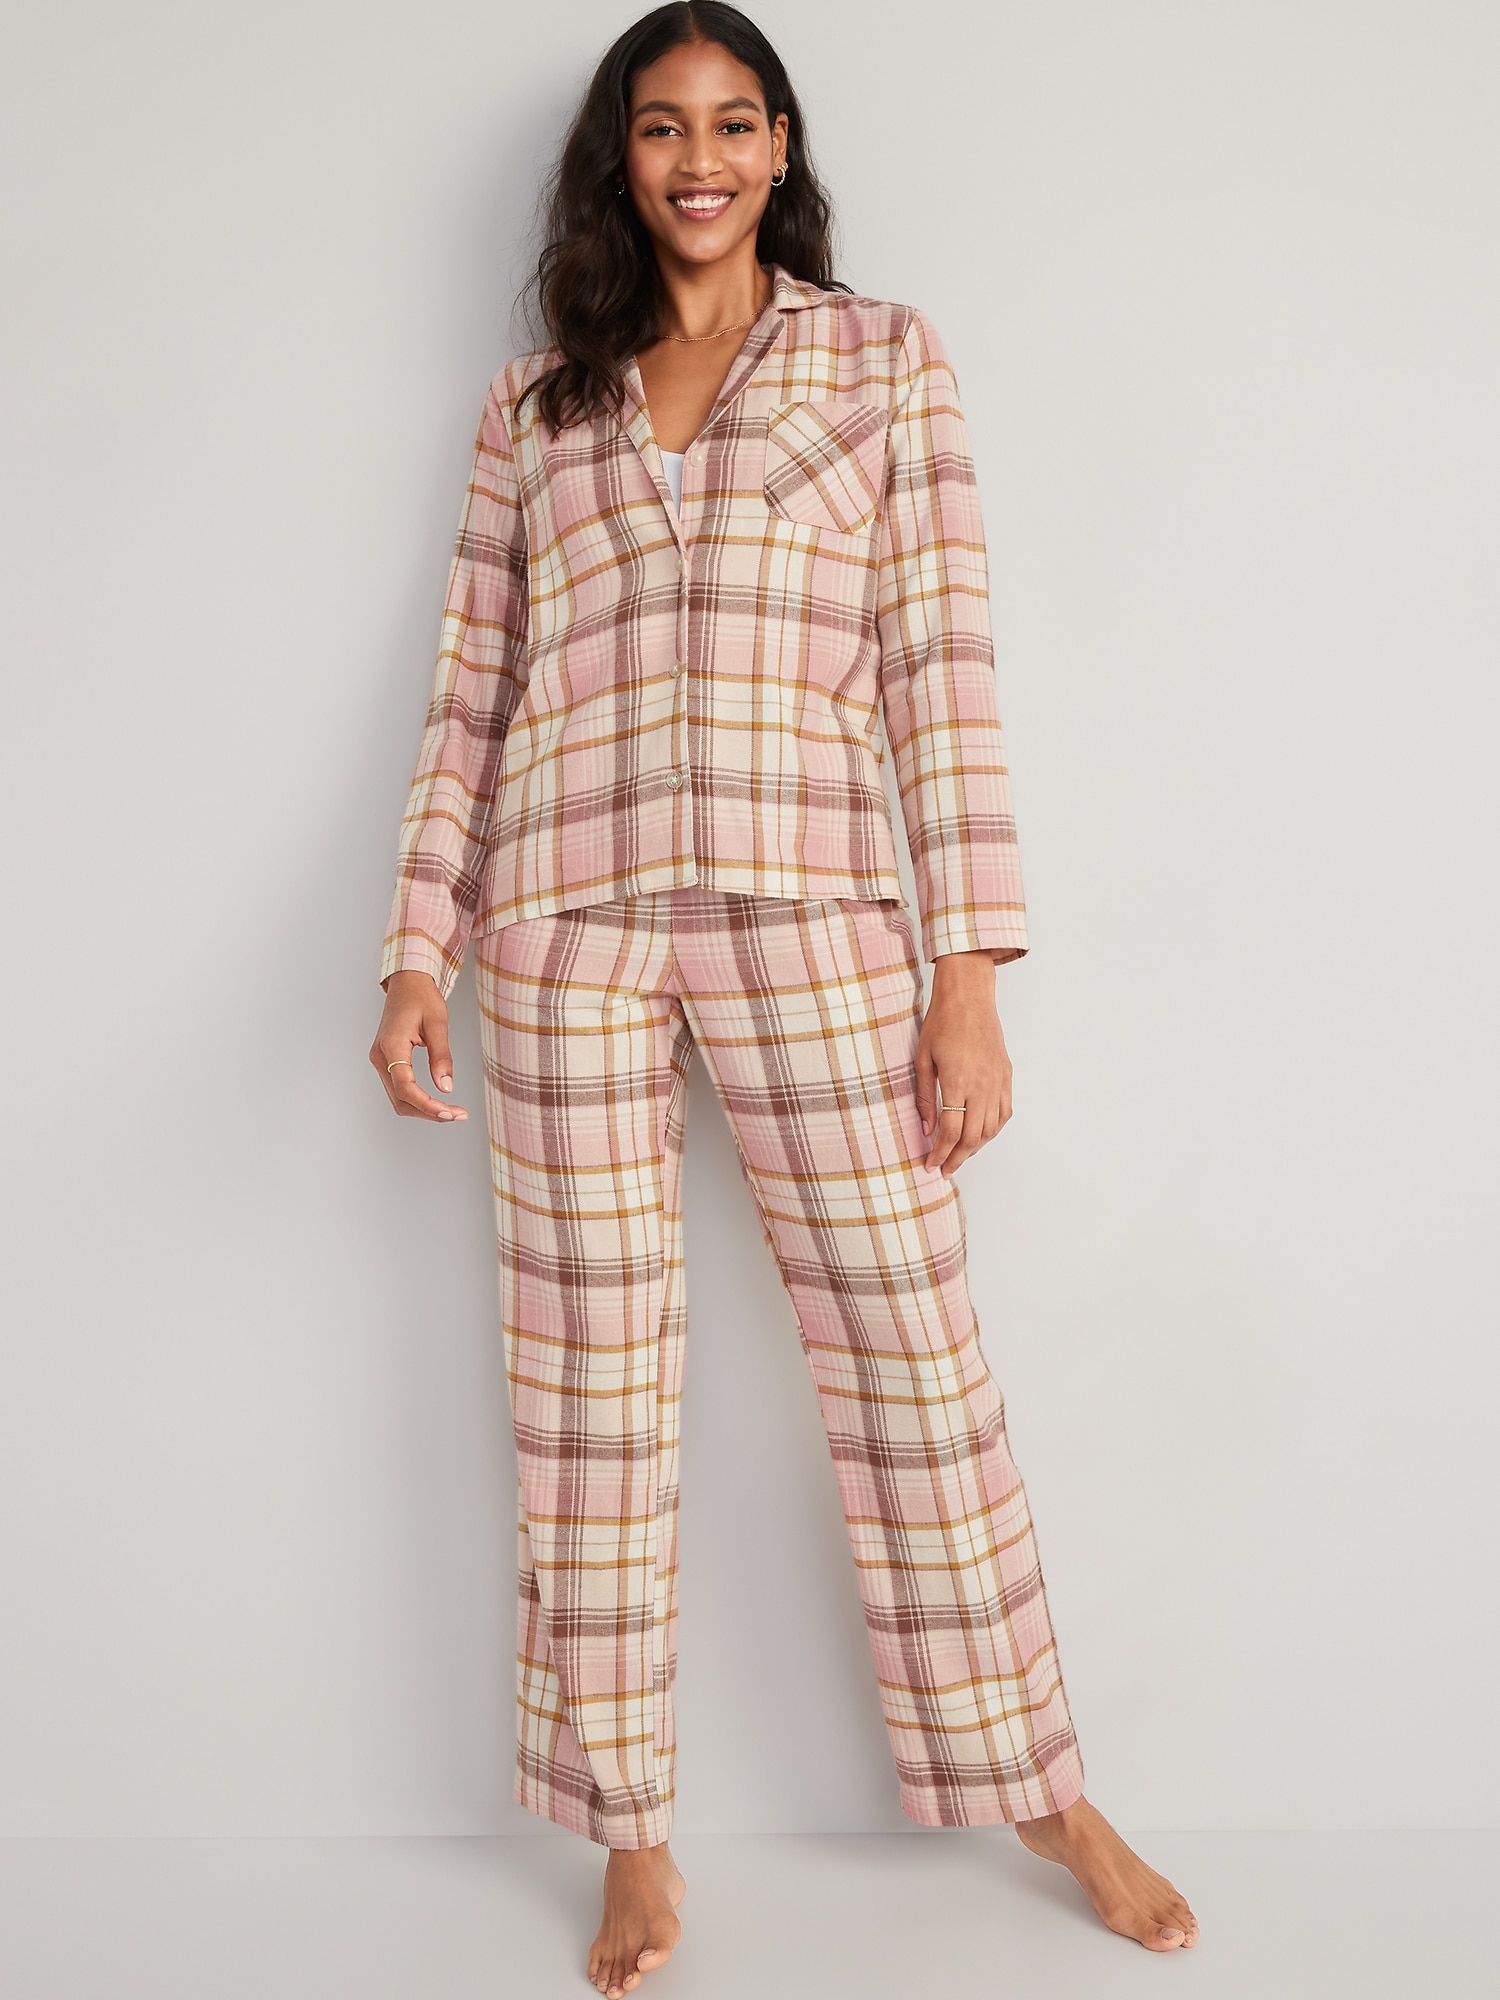  Womens 100% Cotton Super Soft Flannel Plaid Pajama